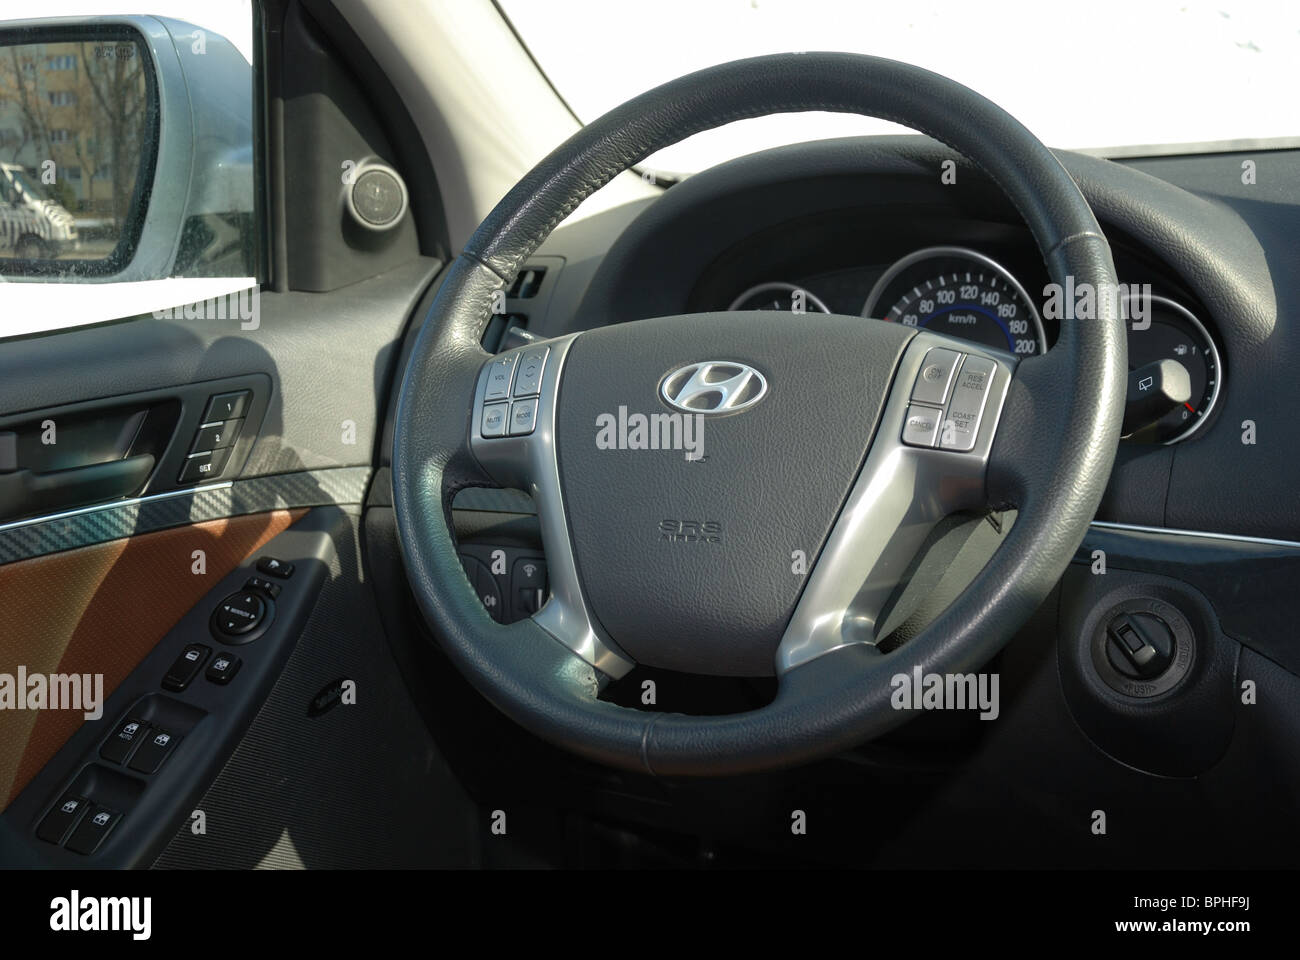 Hyundai car interior hi-res stock photography and images - Alamy